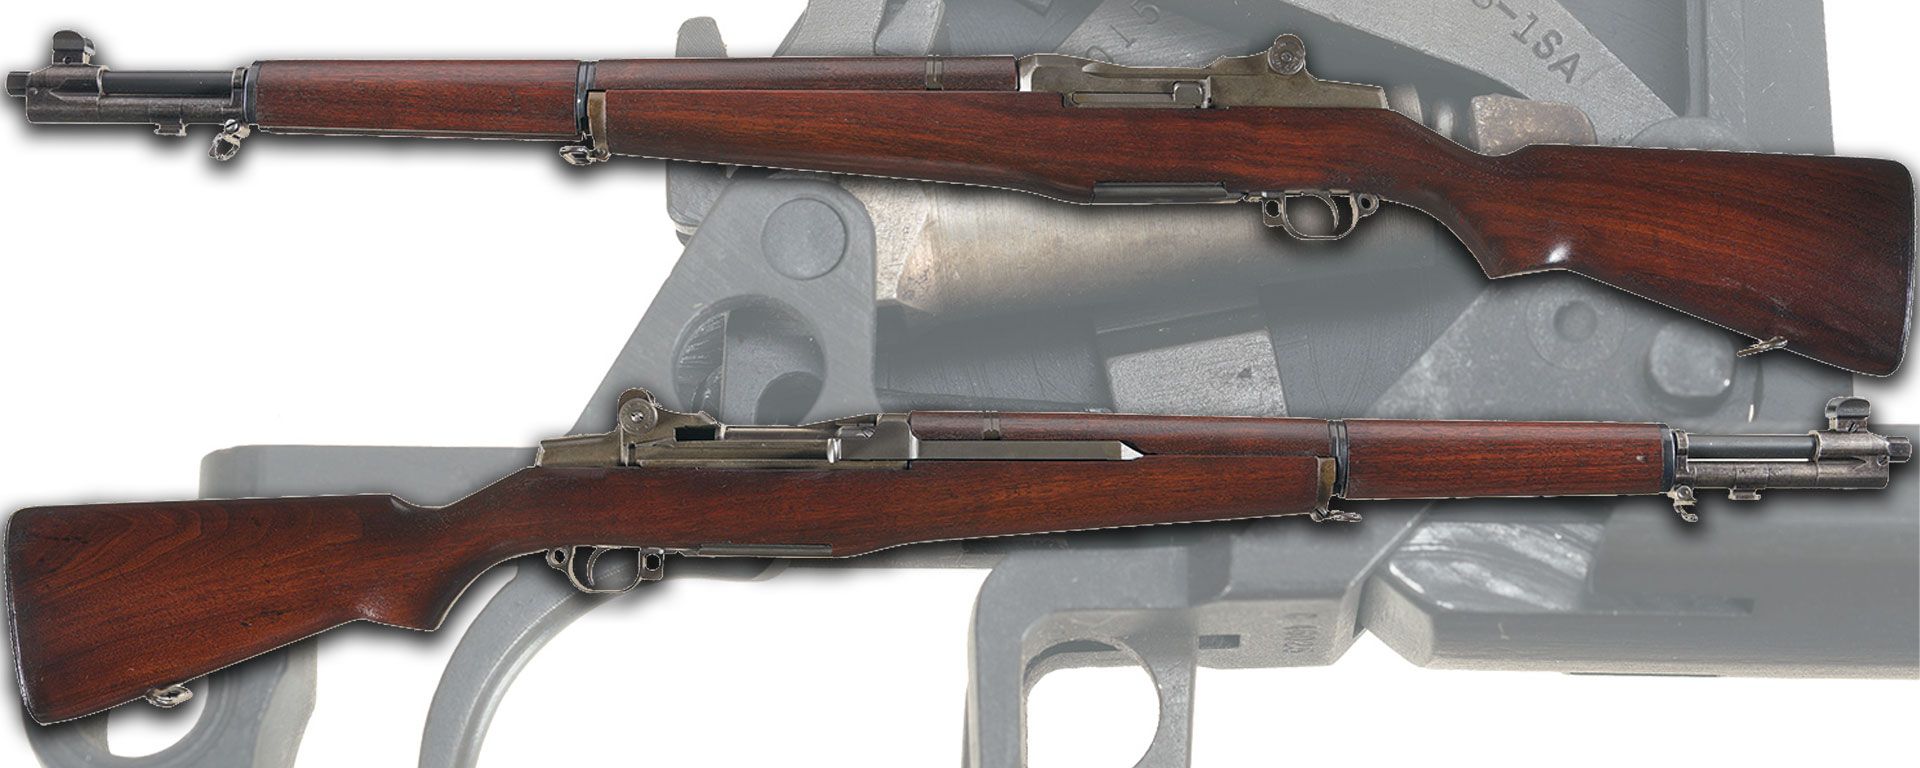 Springfield-armory-M1-rifle-sold-at-RIAC